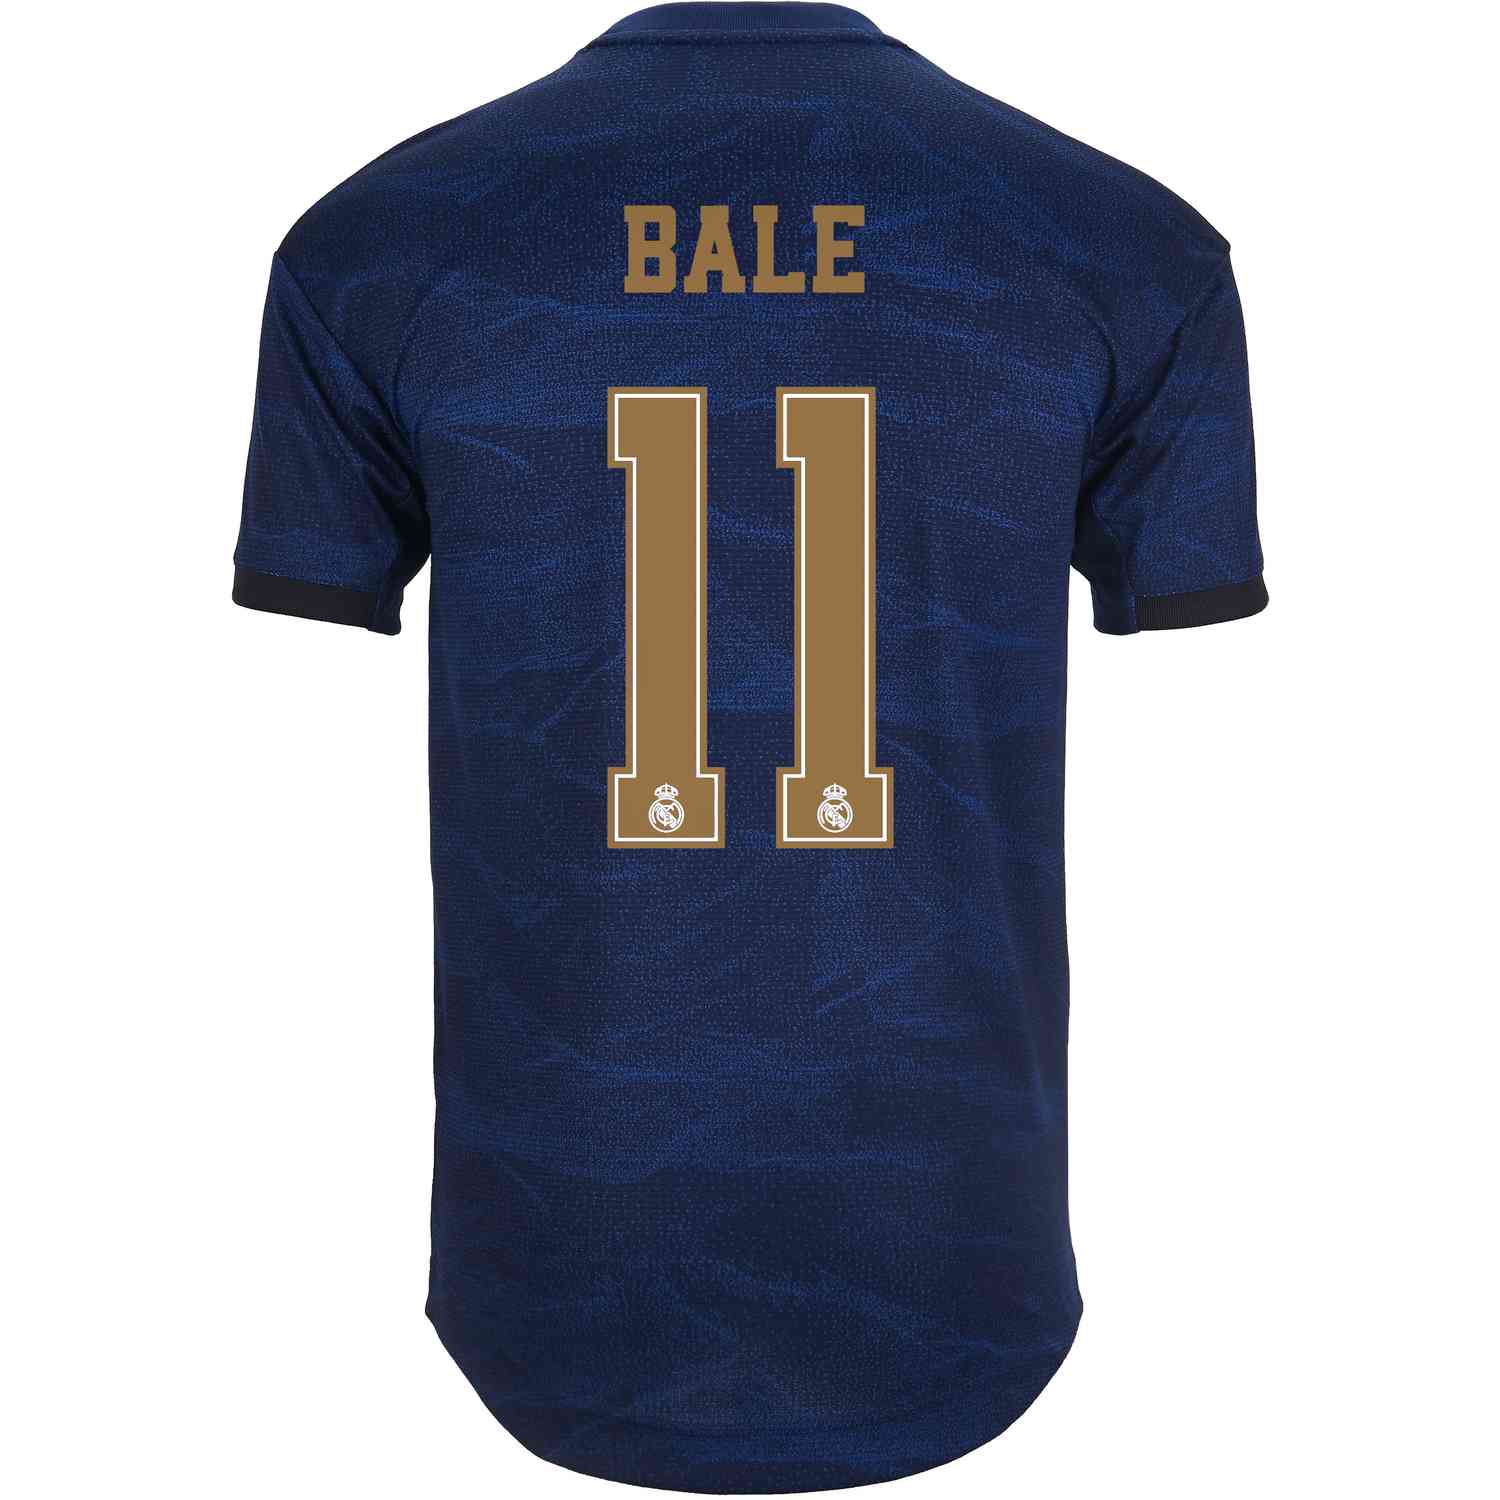 2019/20 adidas Gareth Bale Real Madrid Away Authentic Jersey - SoccerPro